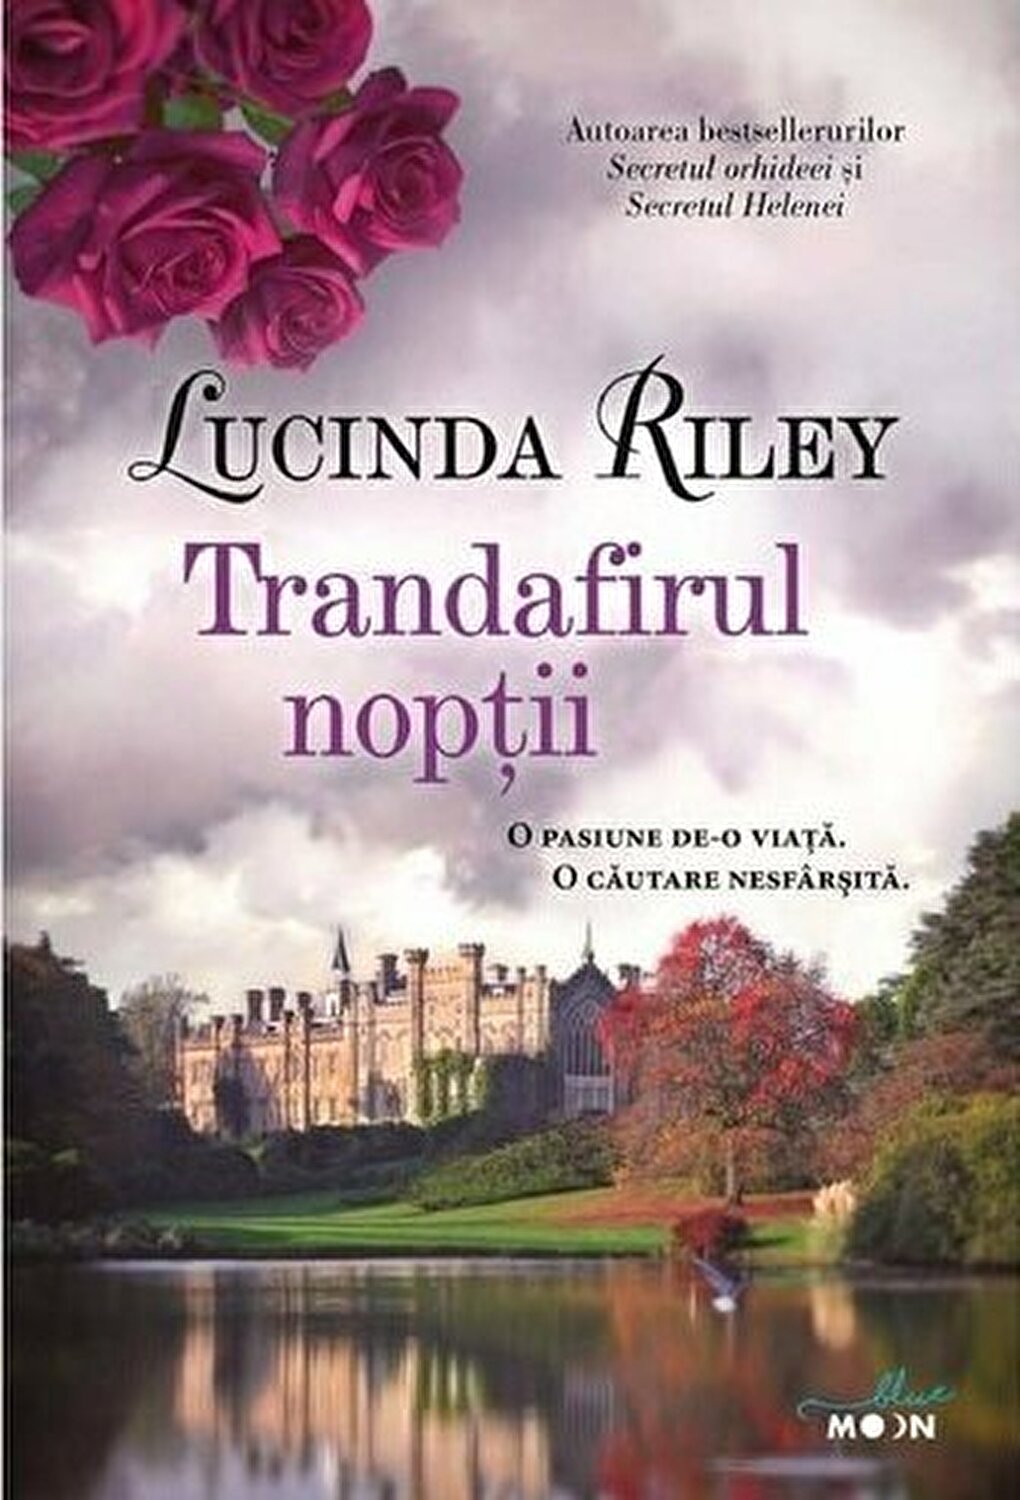 Trandafirul noptii | Lucinda Riley carturesti.ro poza bestsellers.ro